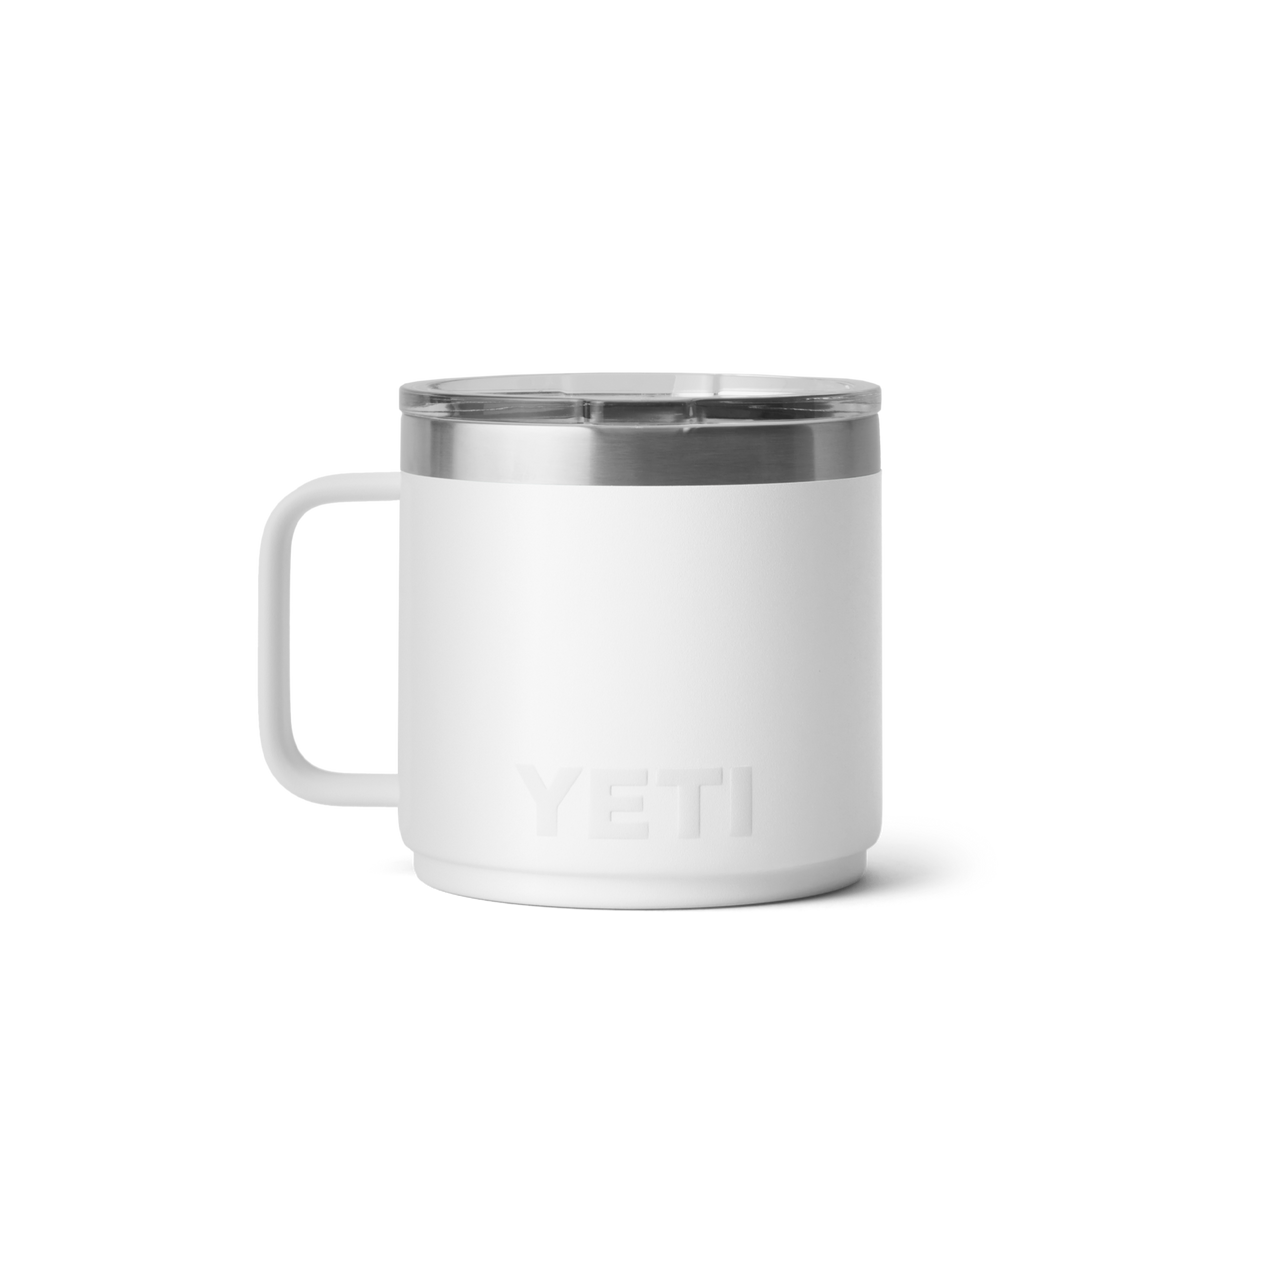 YETI Rambler 14 Oz Mug 2.0 MS White - Backcountry & Beyond